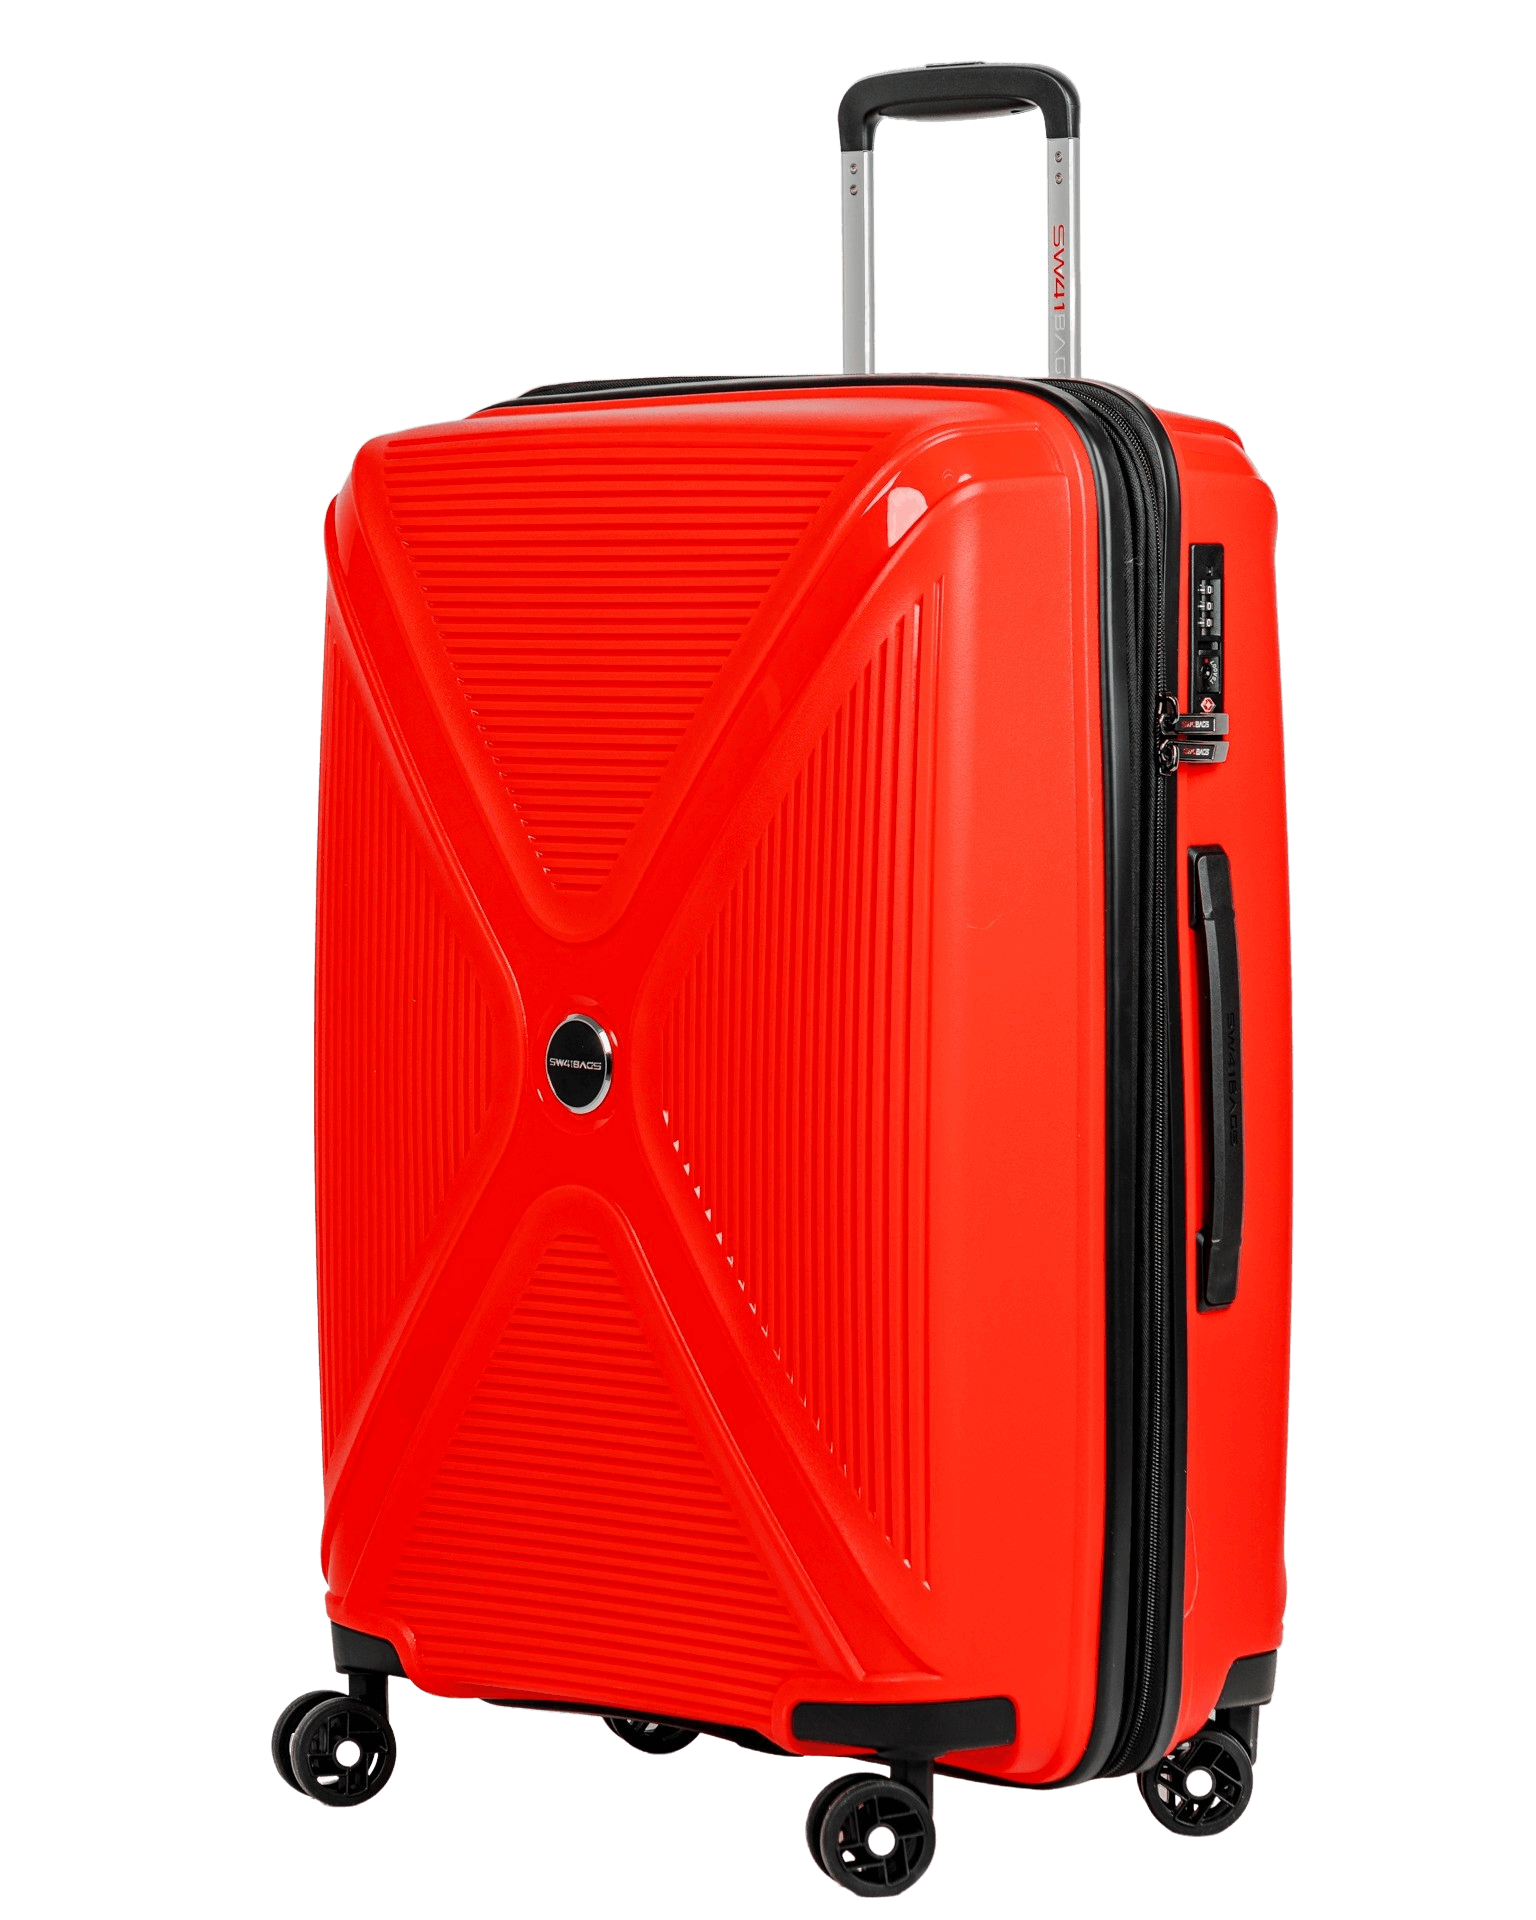 Cross Box - Grösse M 67 cm - Swissbags: Travel Bags, Luggage, Accessories -  Vouvry, Switzerland - Travel Bags, Luggage, Accessories - Vouvry,  Switzerland